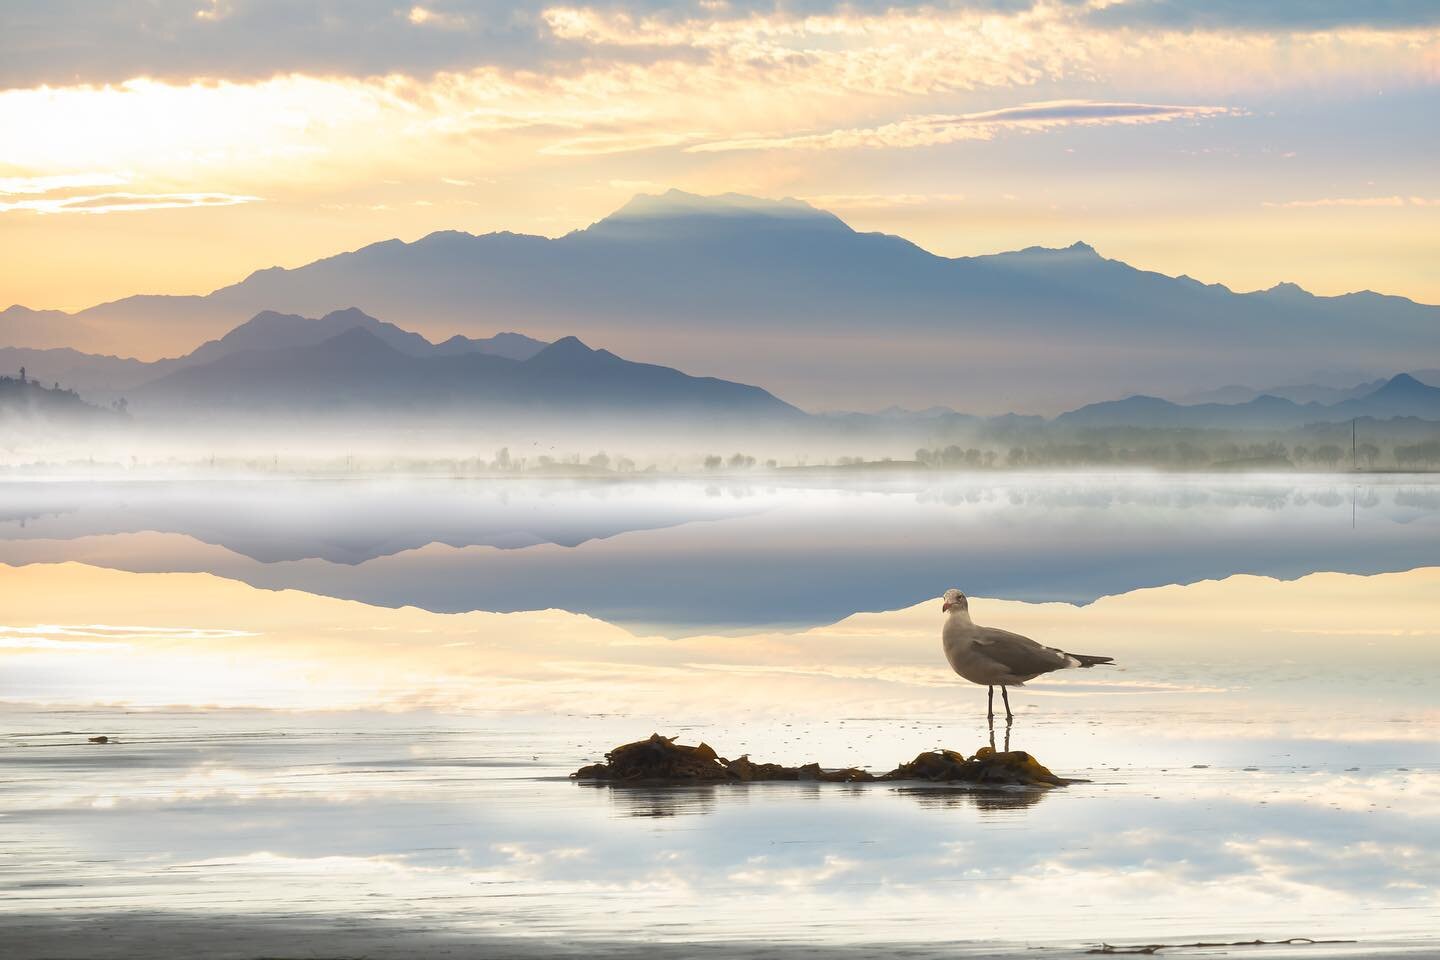 Jacinto

#photooftheday #seagull #gull #birds #reflection #sunrise_sunset_photogroup #sunrise #calm #peace #peaceful #mountains #mountain #mist #fog #shore #instagood